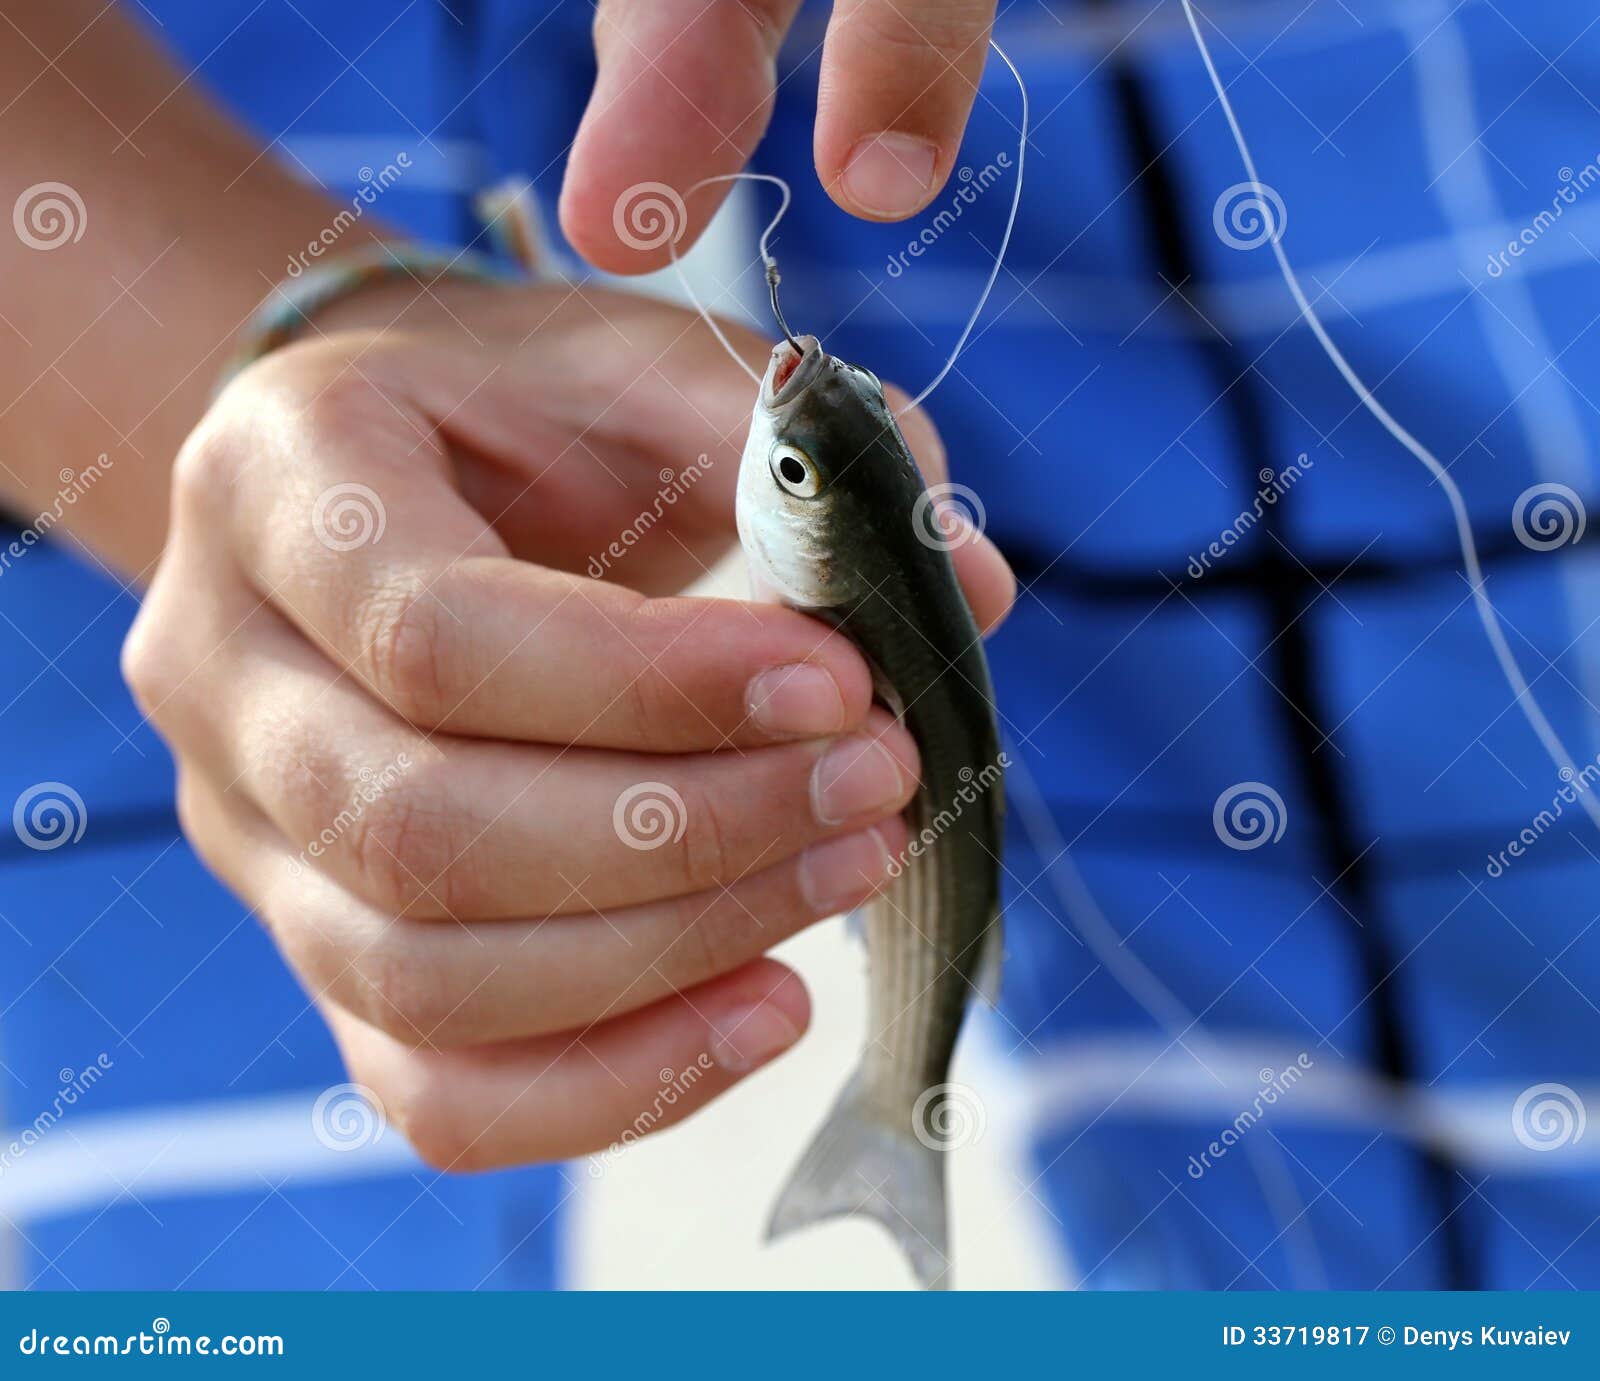 little-fish-caught-hook-arms-33719817.jpg